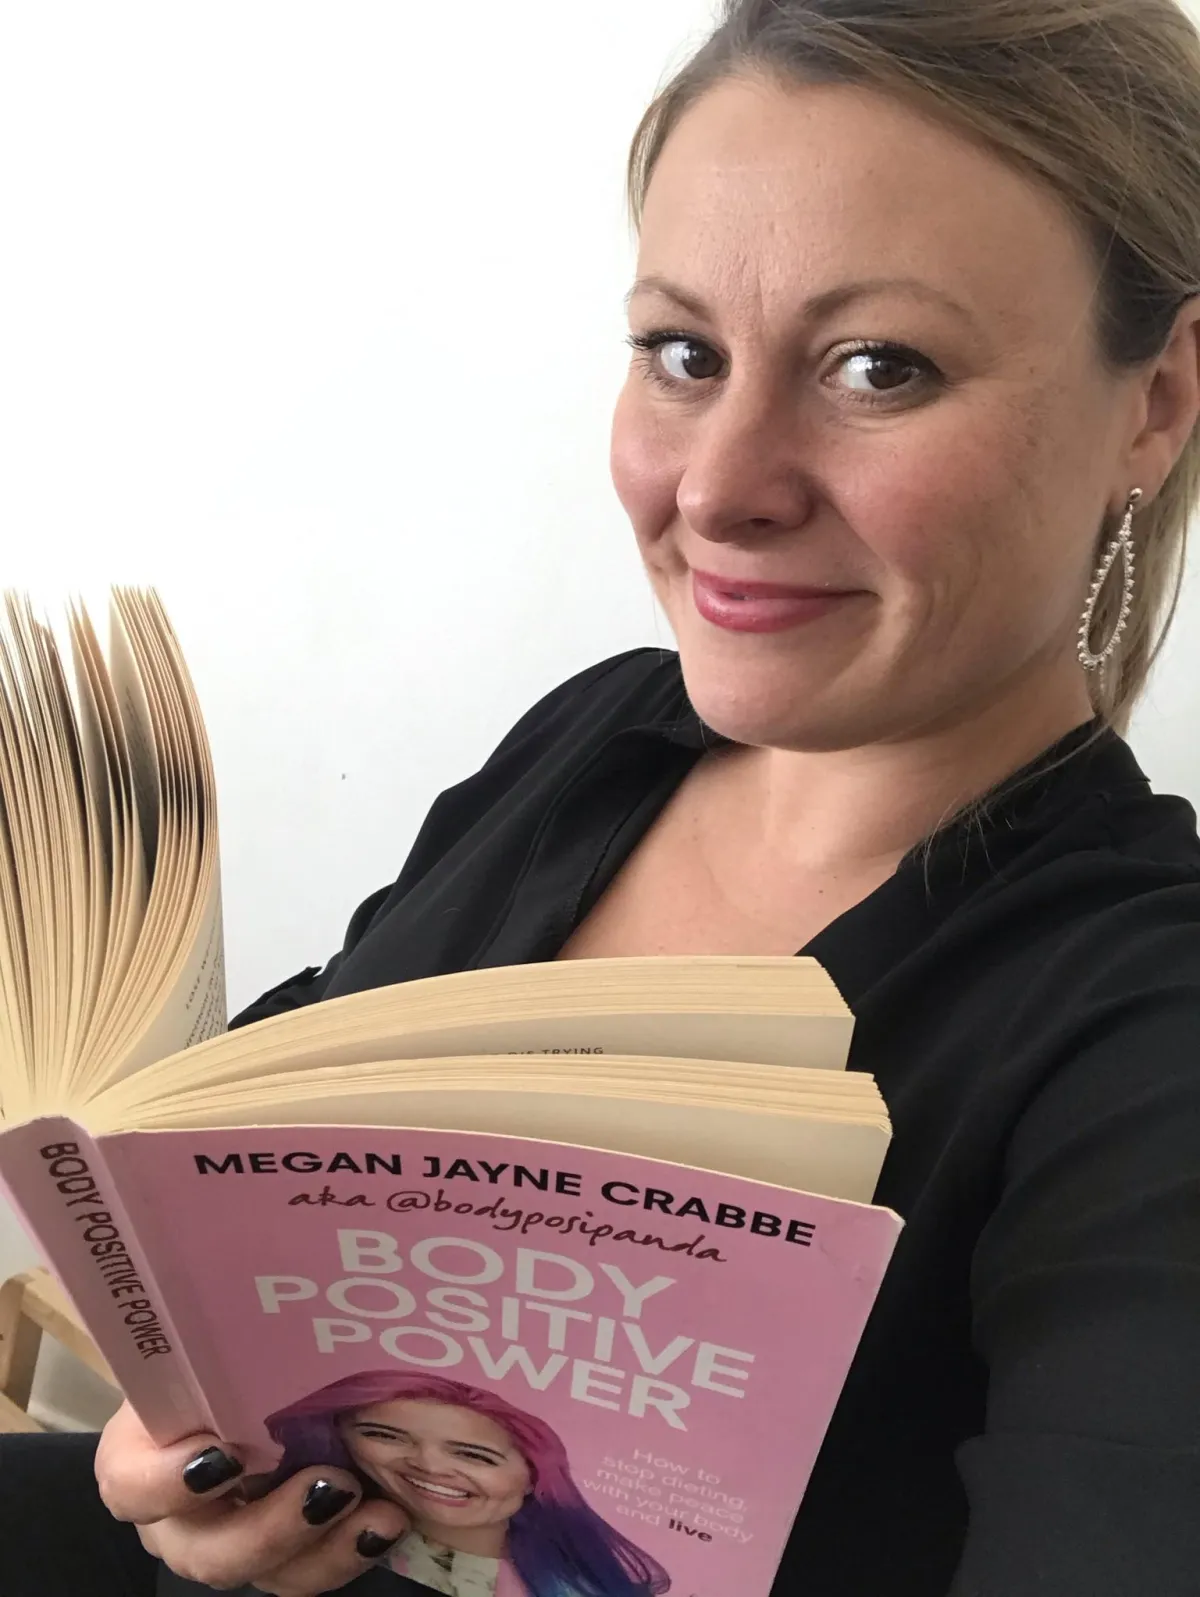 Lisa reading Body Positive Power by Megan Jayne Crabbe